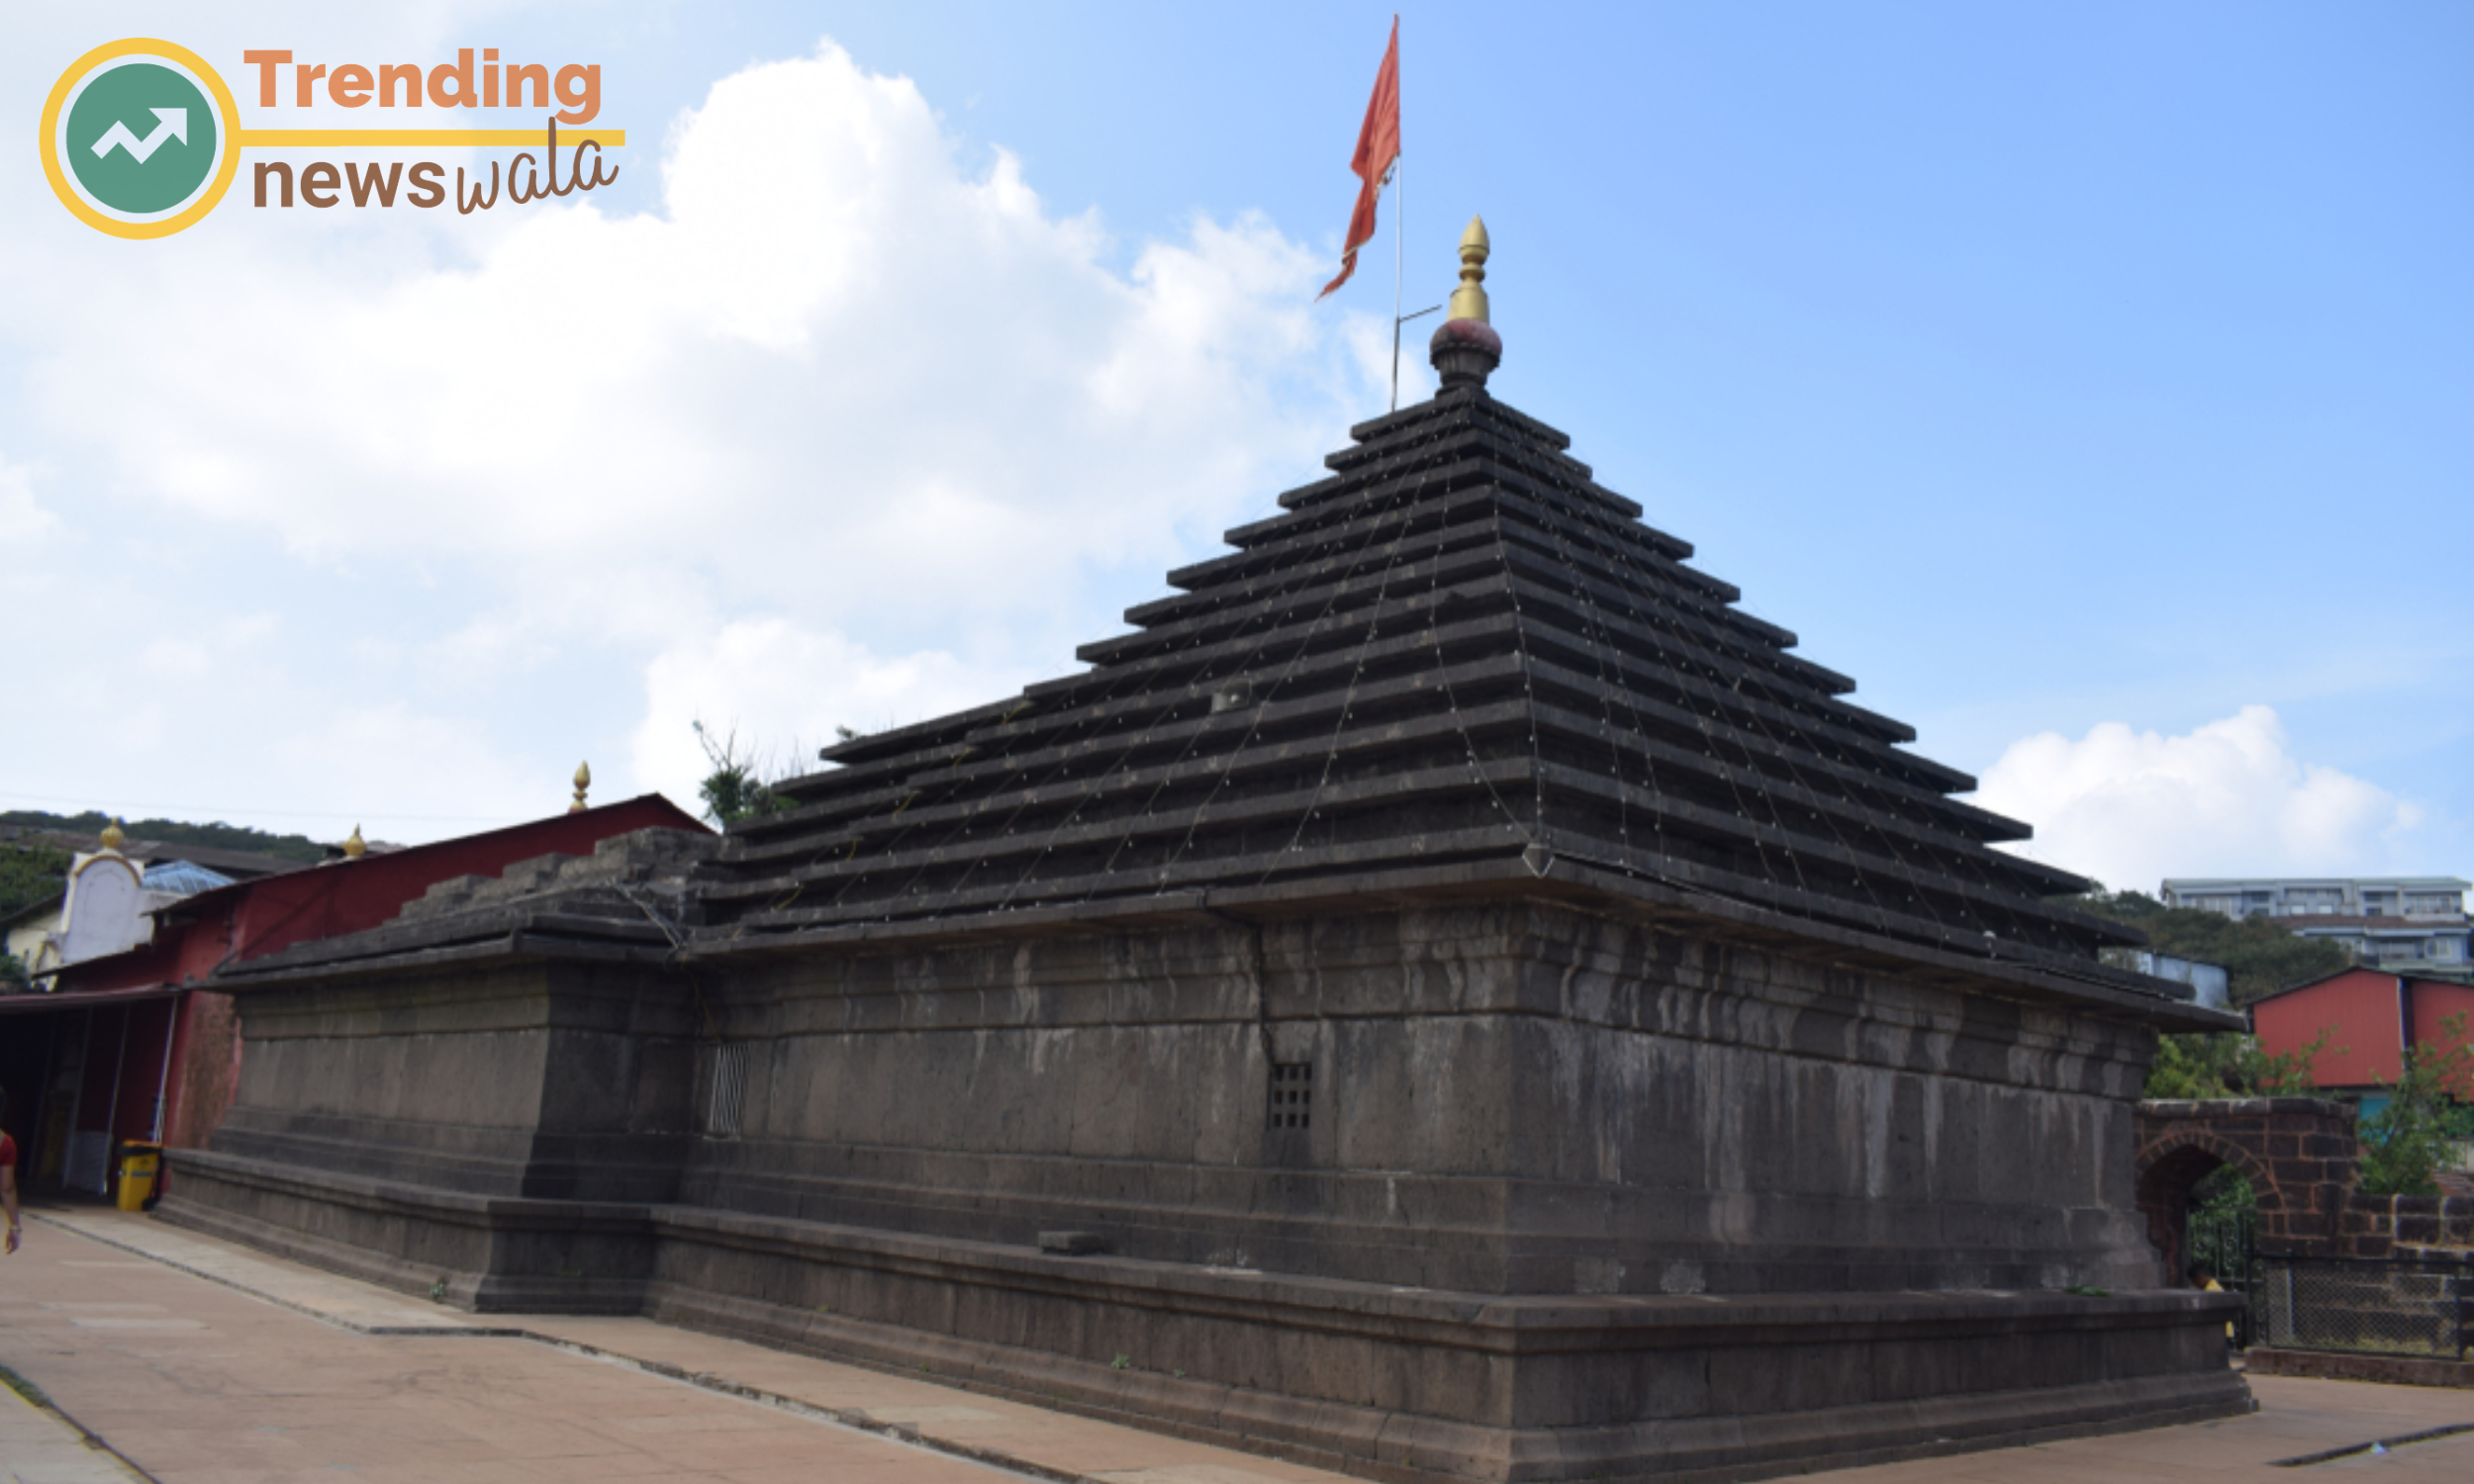 Visit the ancient Mahabaleshwar Temple dedicated to Lord Shiva